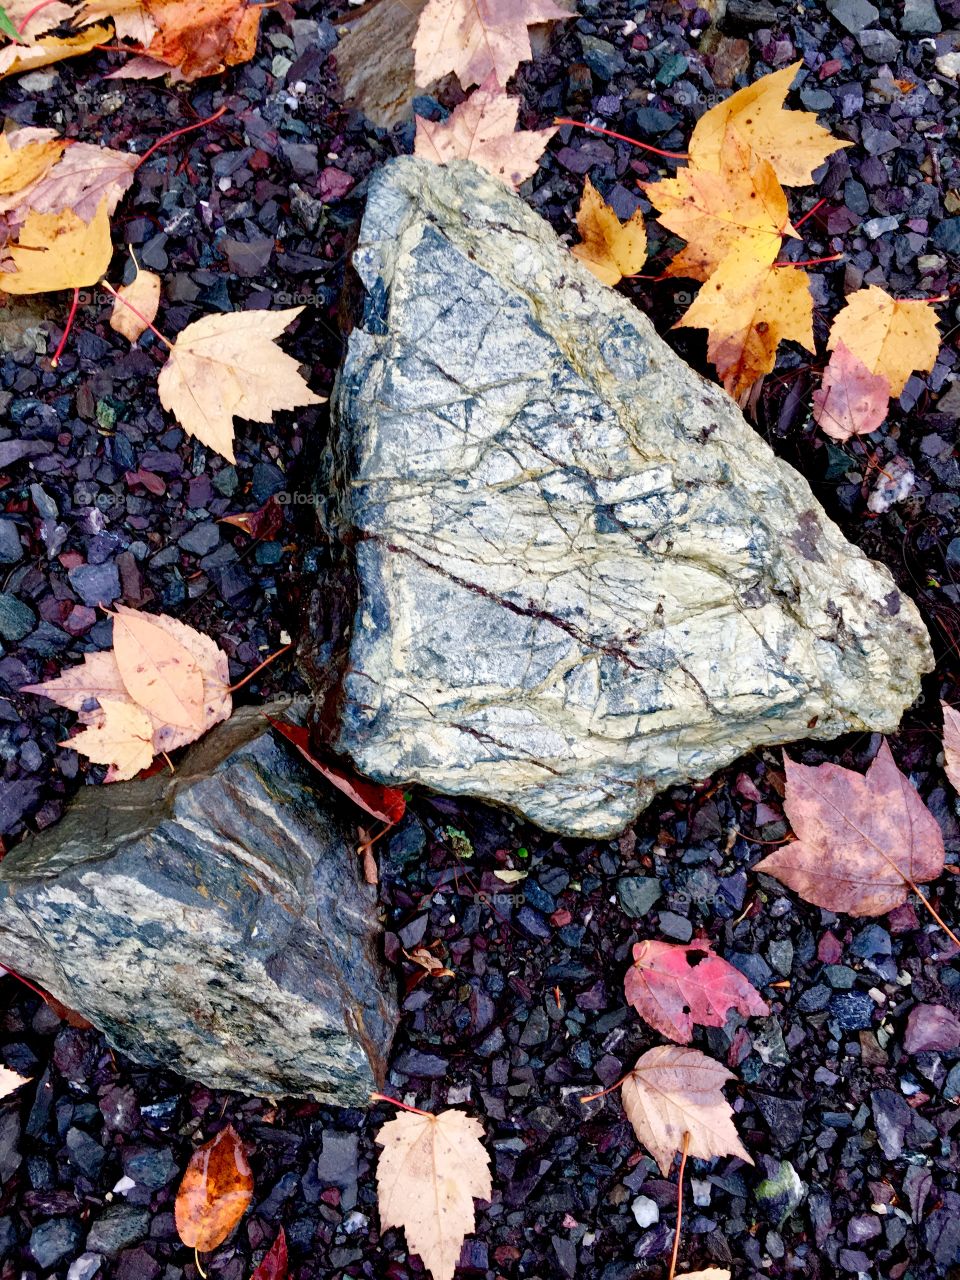 Shiny rocks and leaves